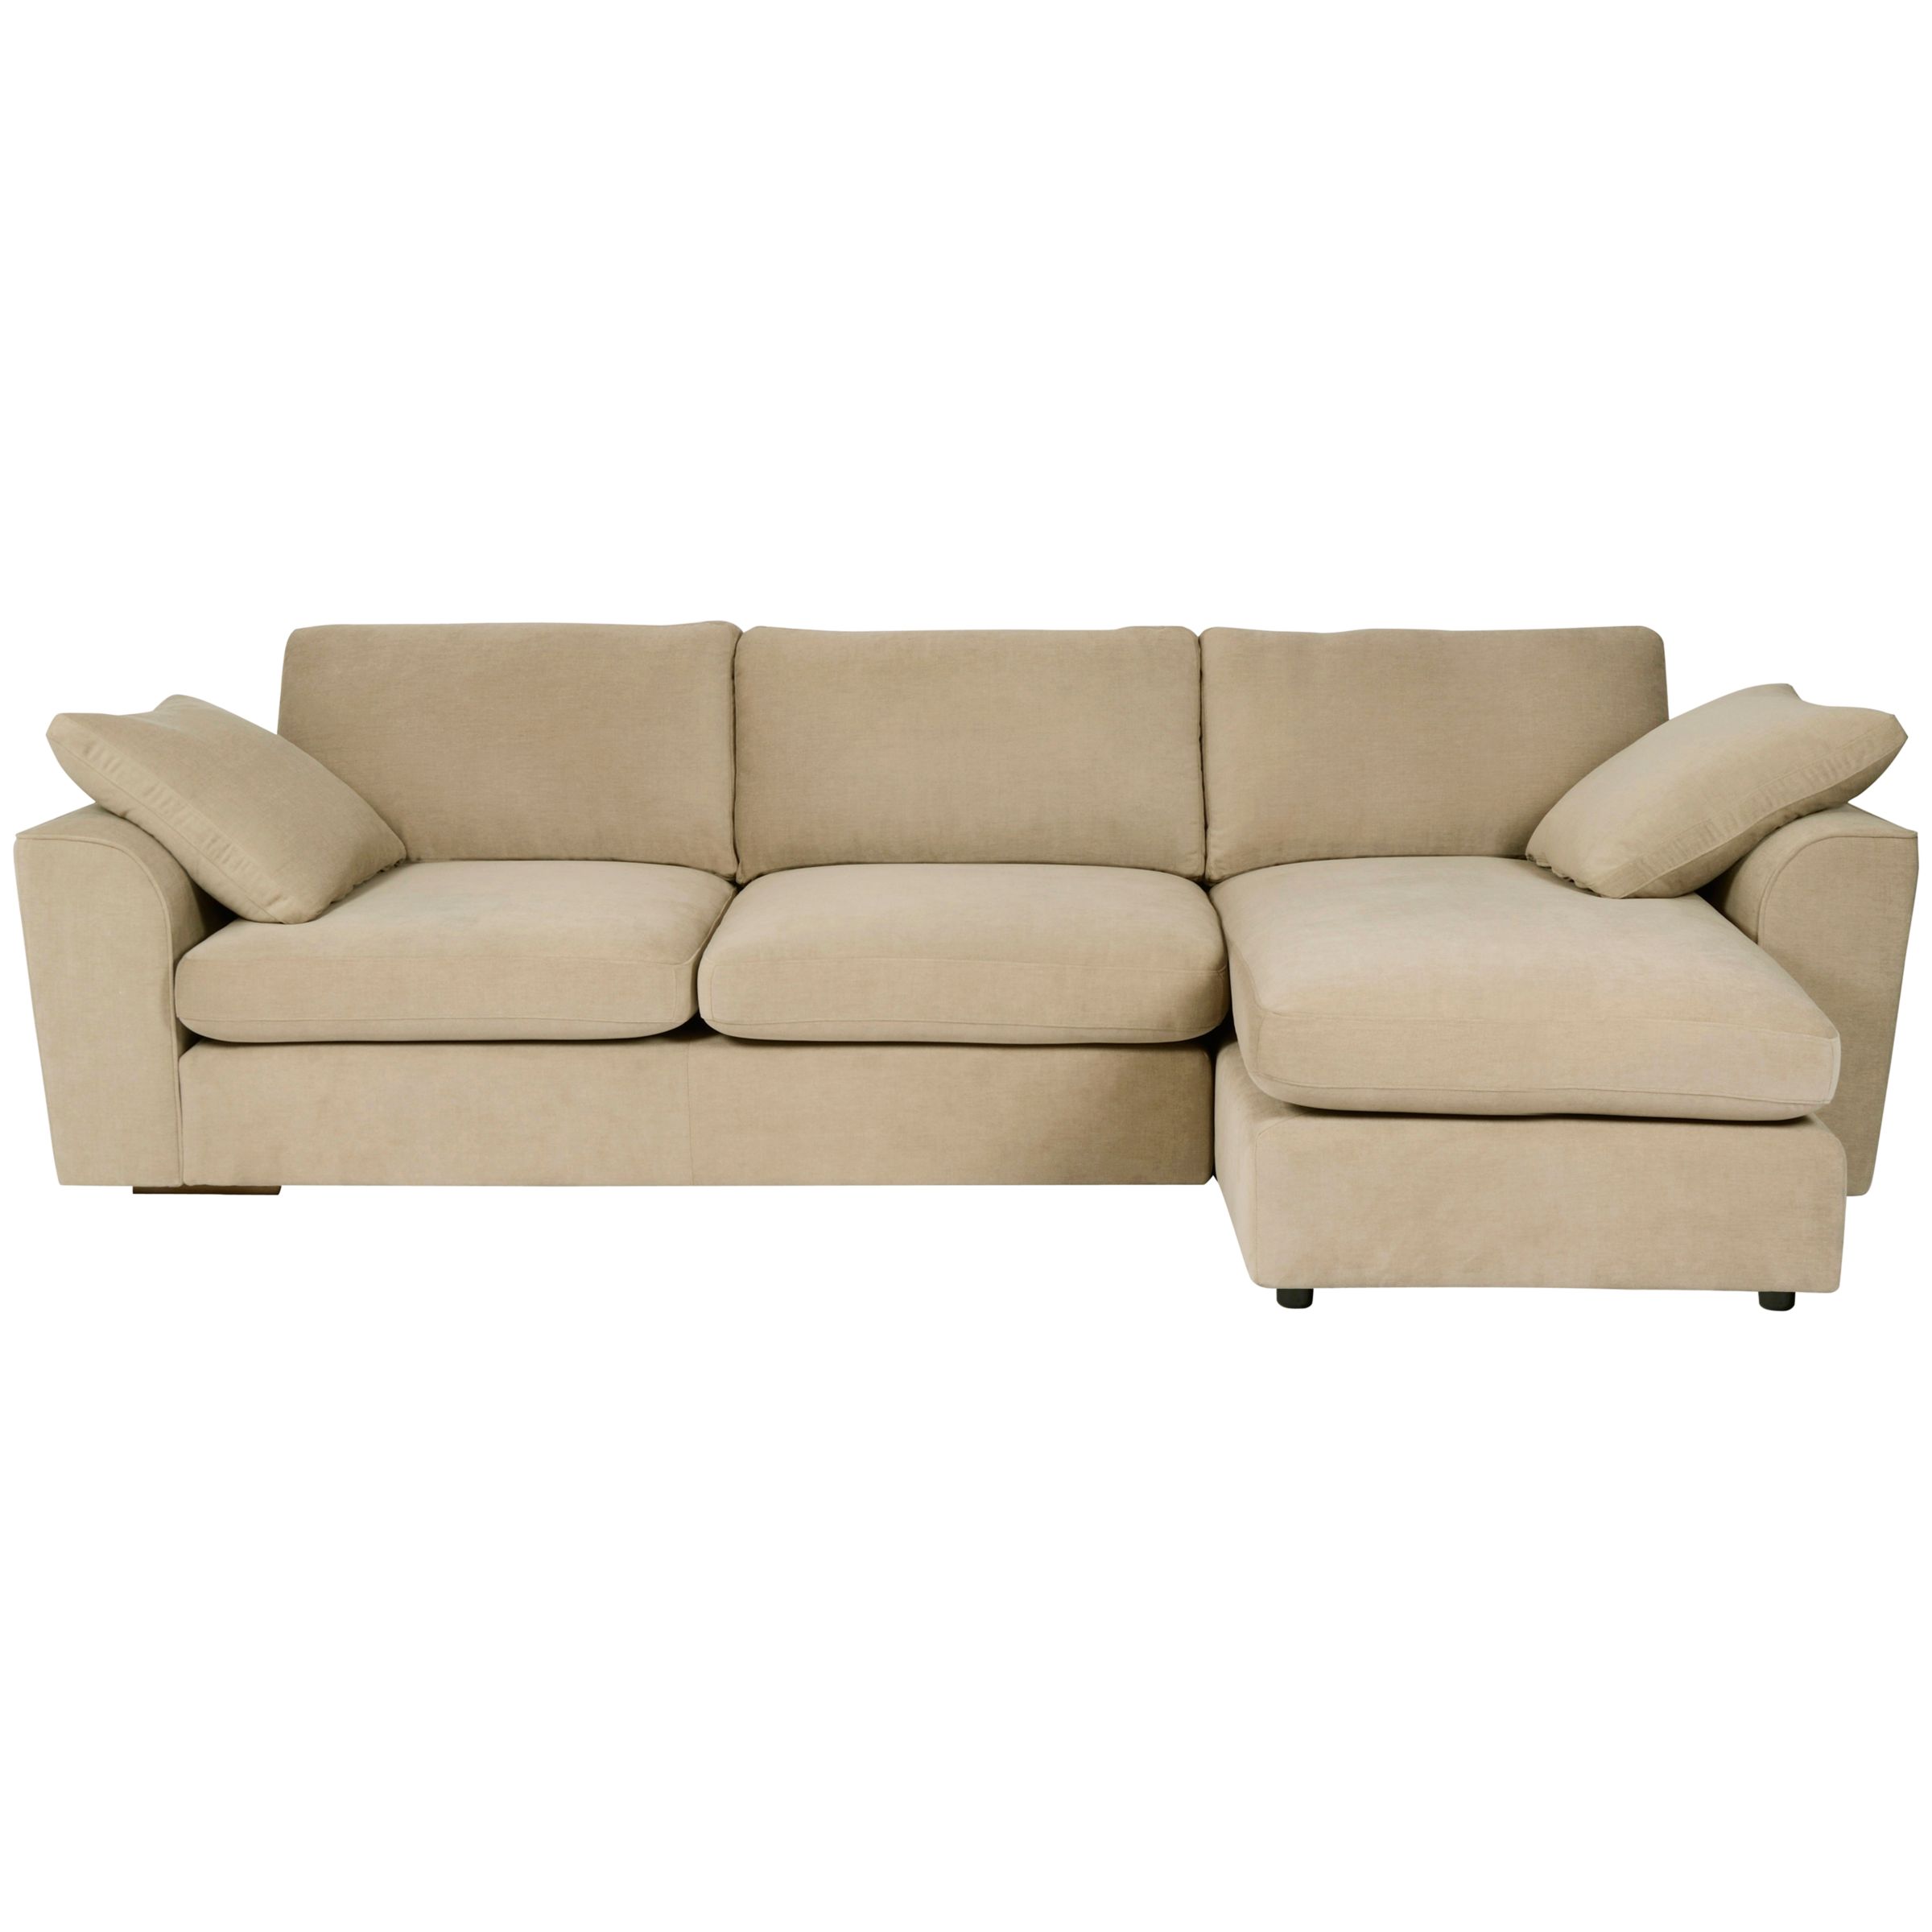 John Lewis Jones Options 2 Chaise End Sofa, Cream, width 185cm